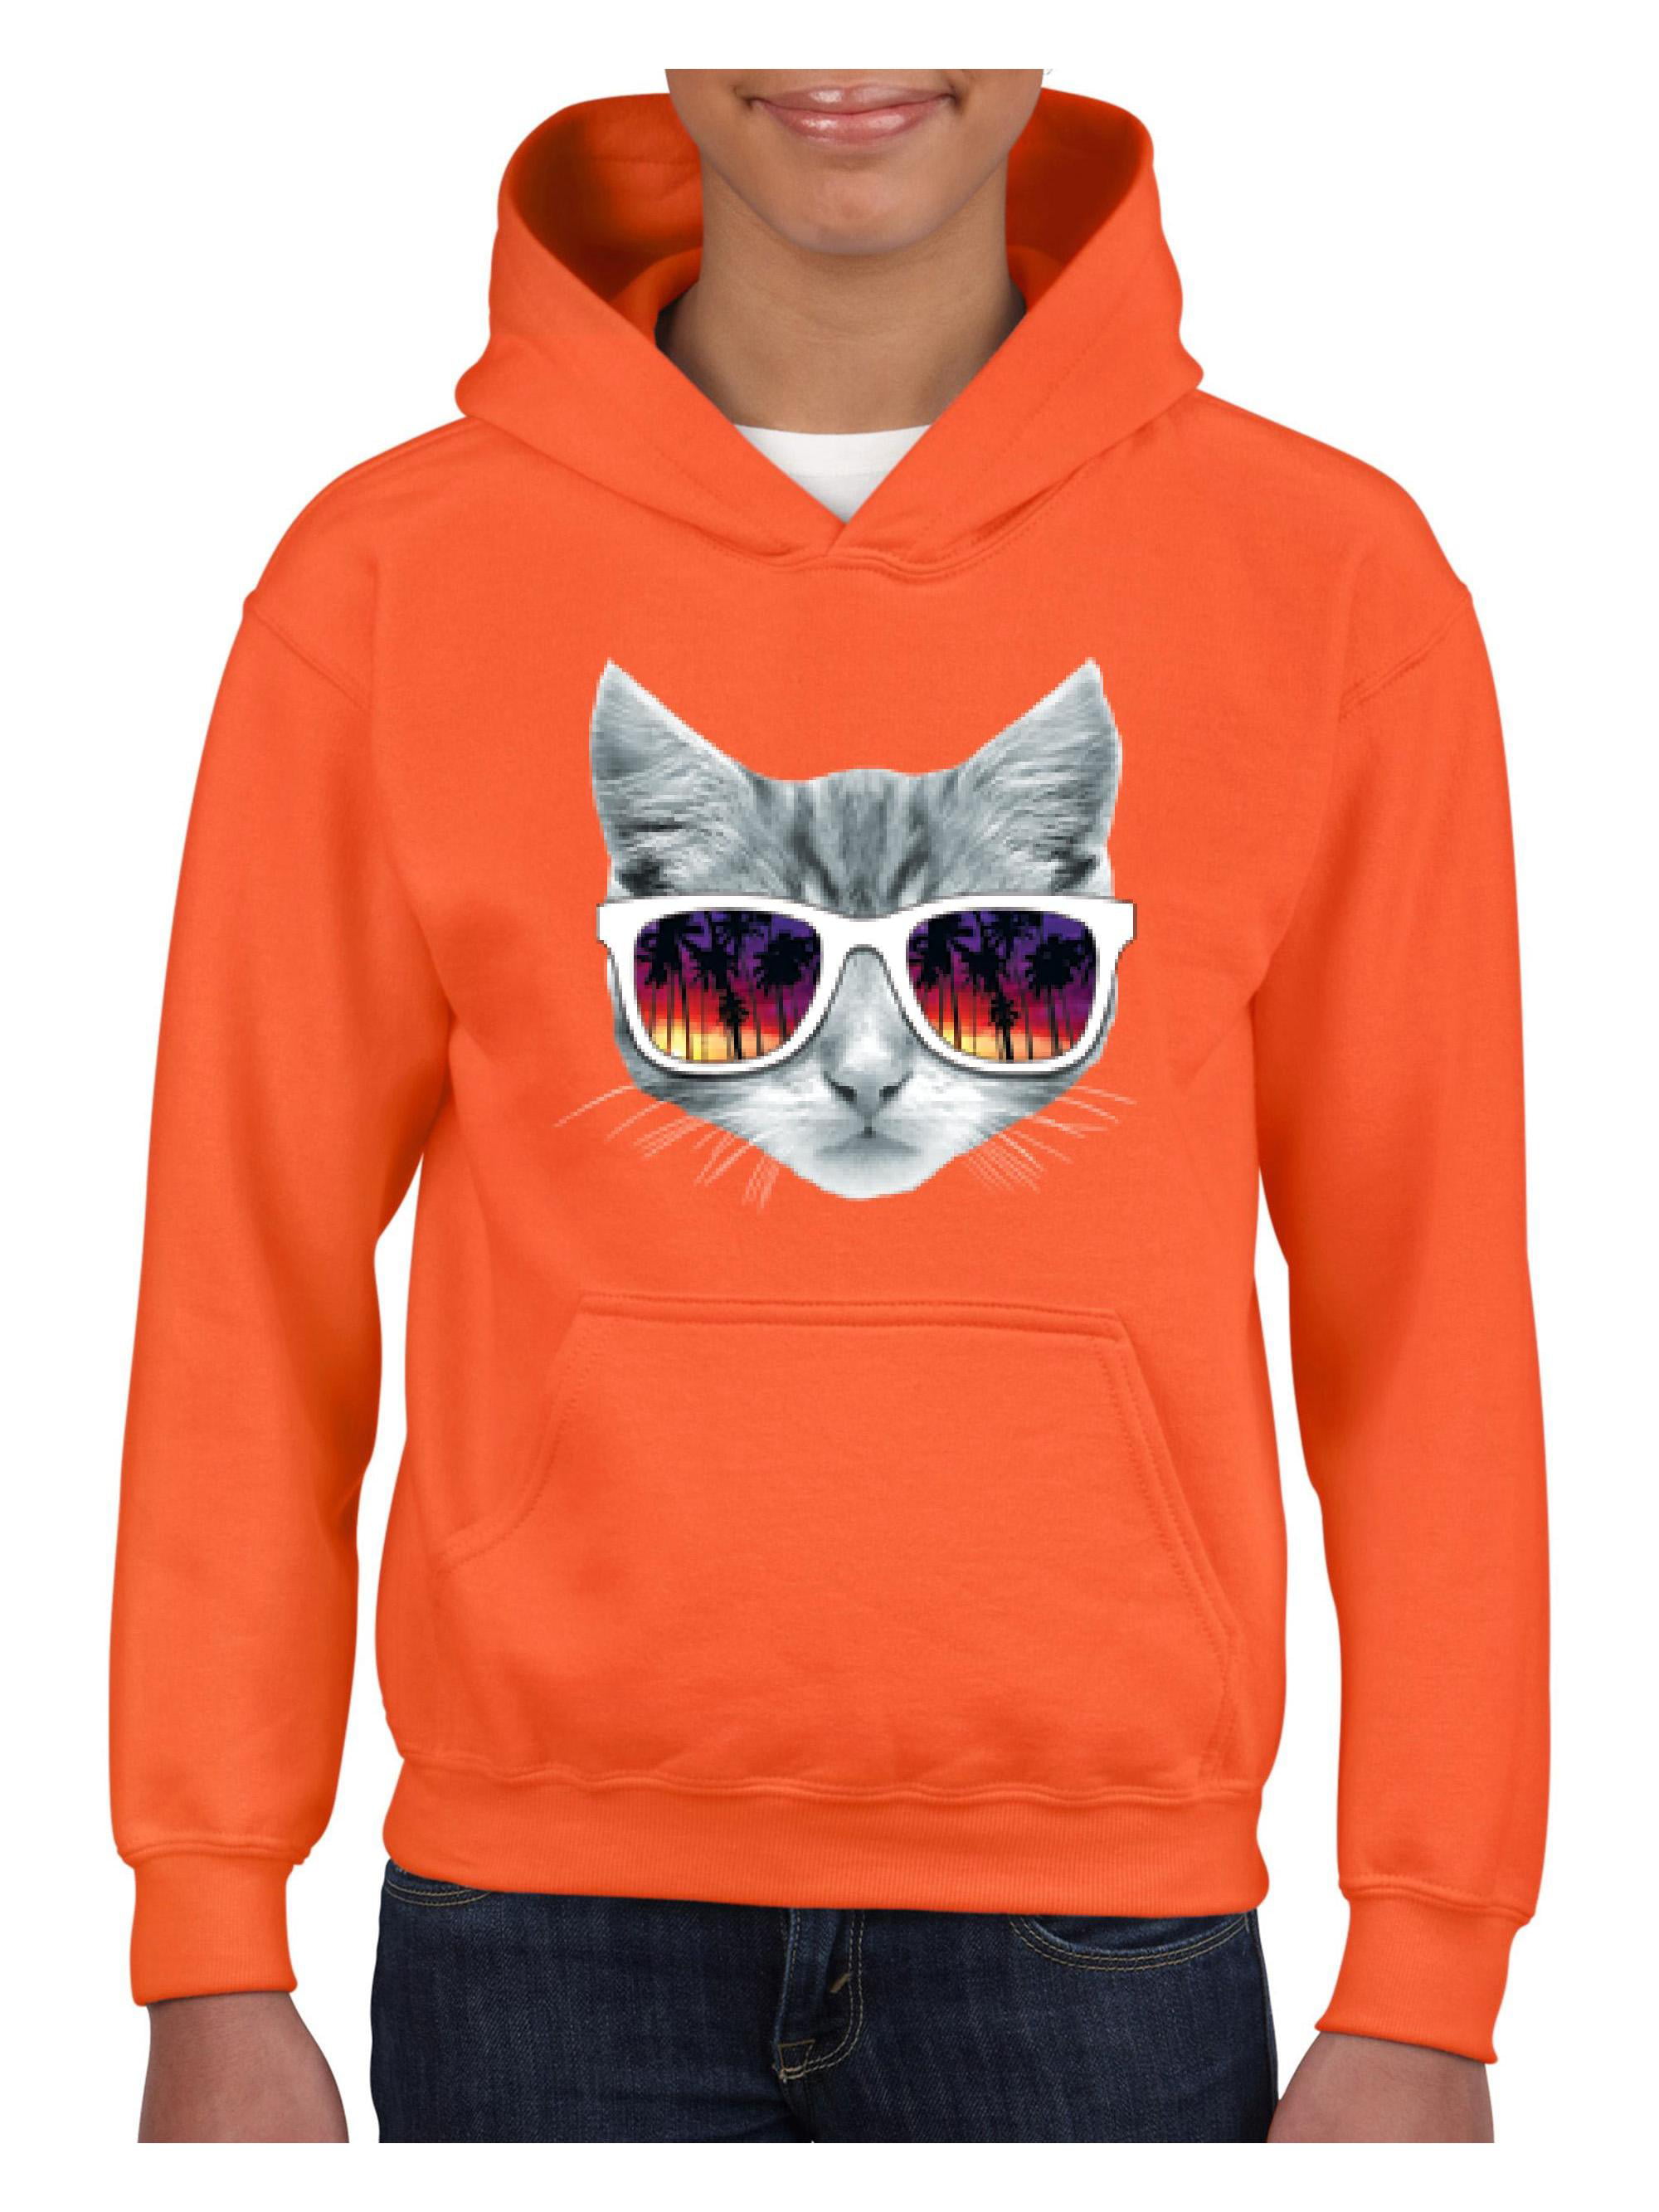 Big Girls Hoodies and Sweatshirts - Kitty - Walmart.com